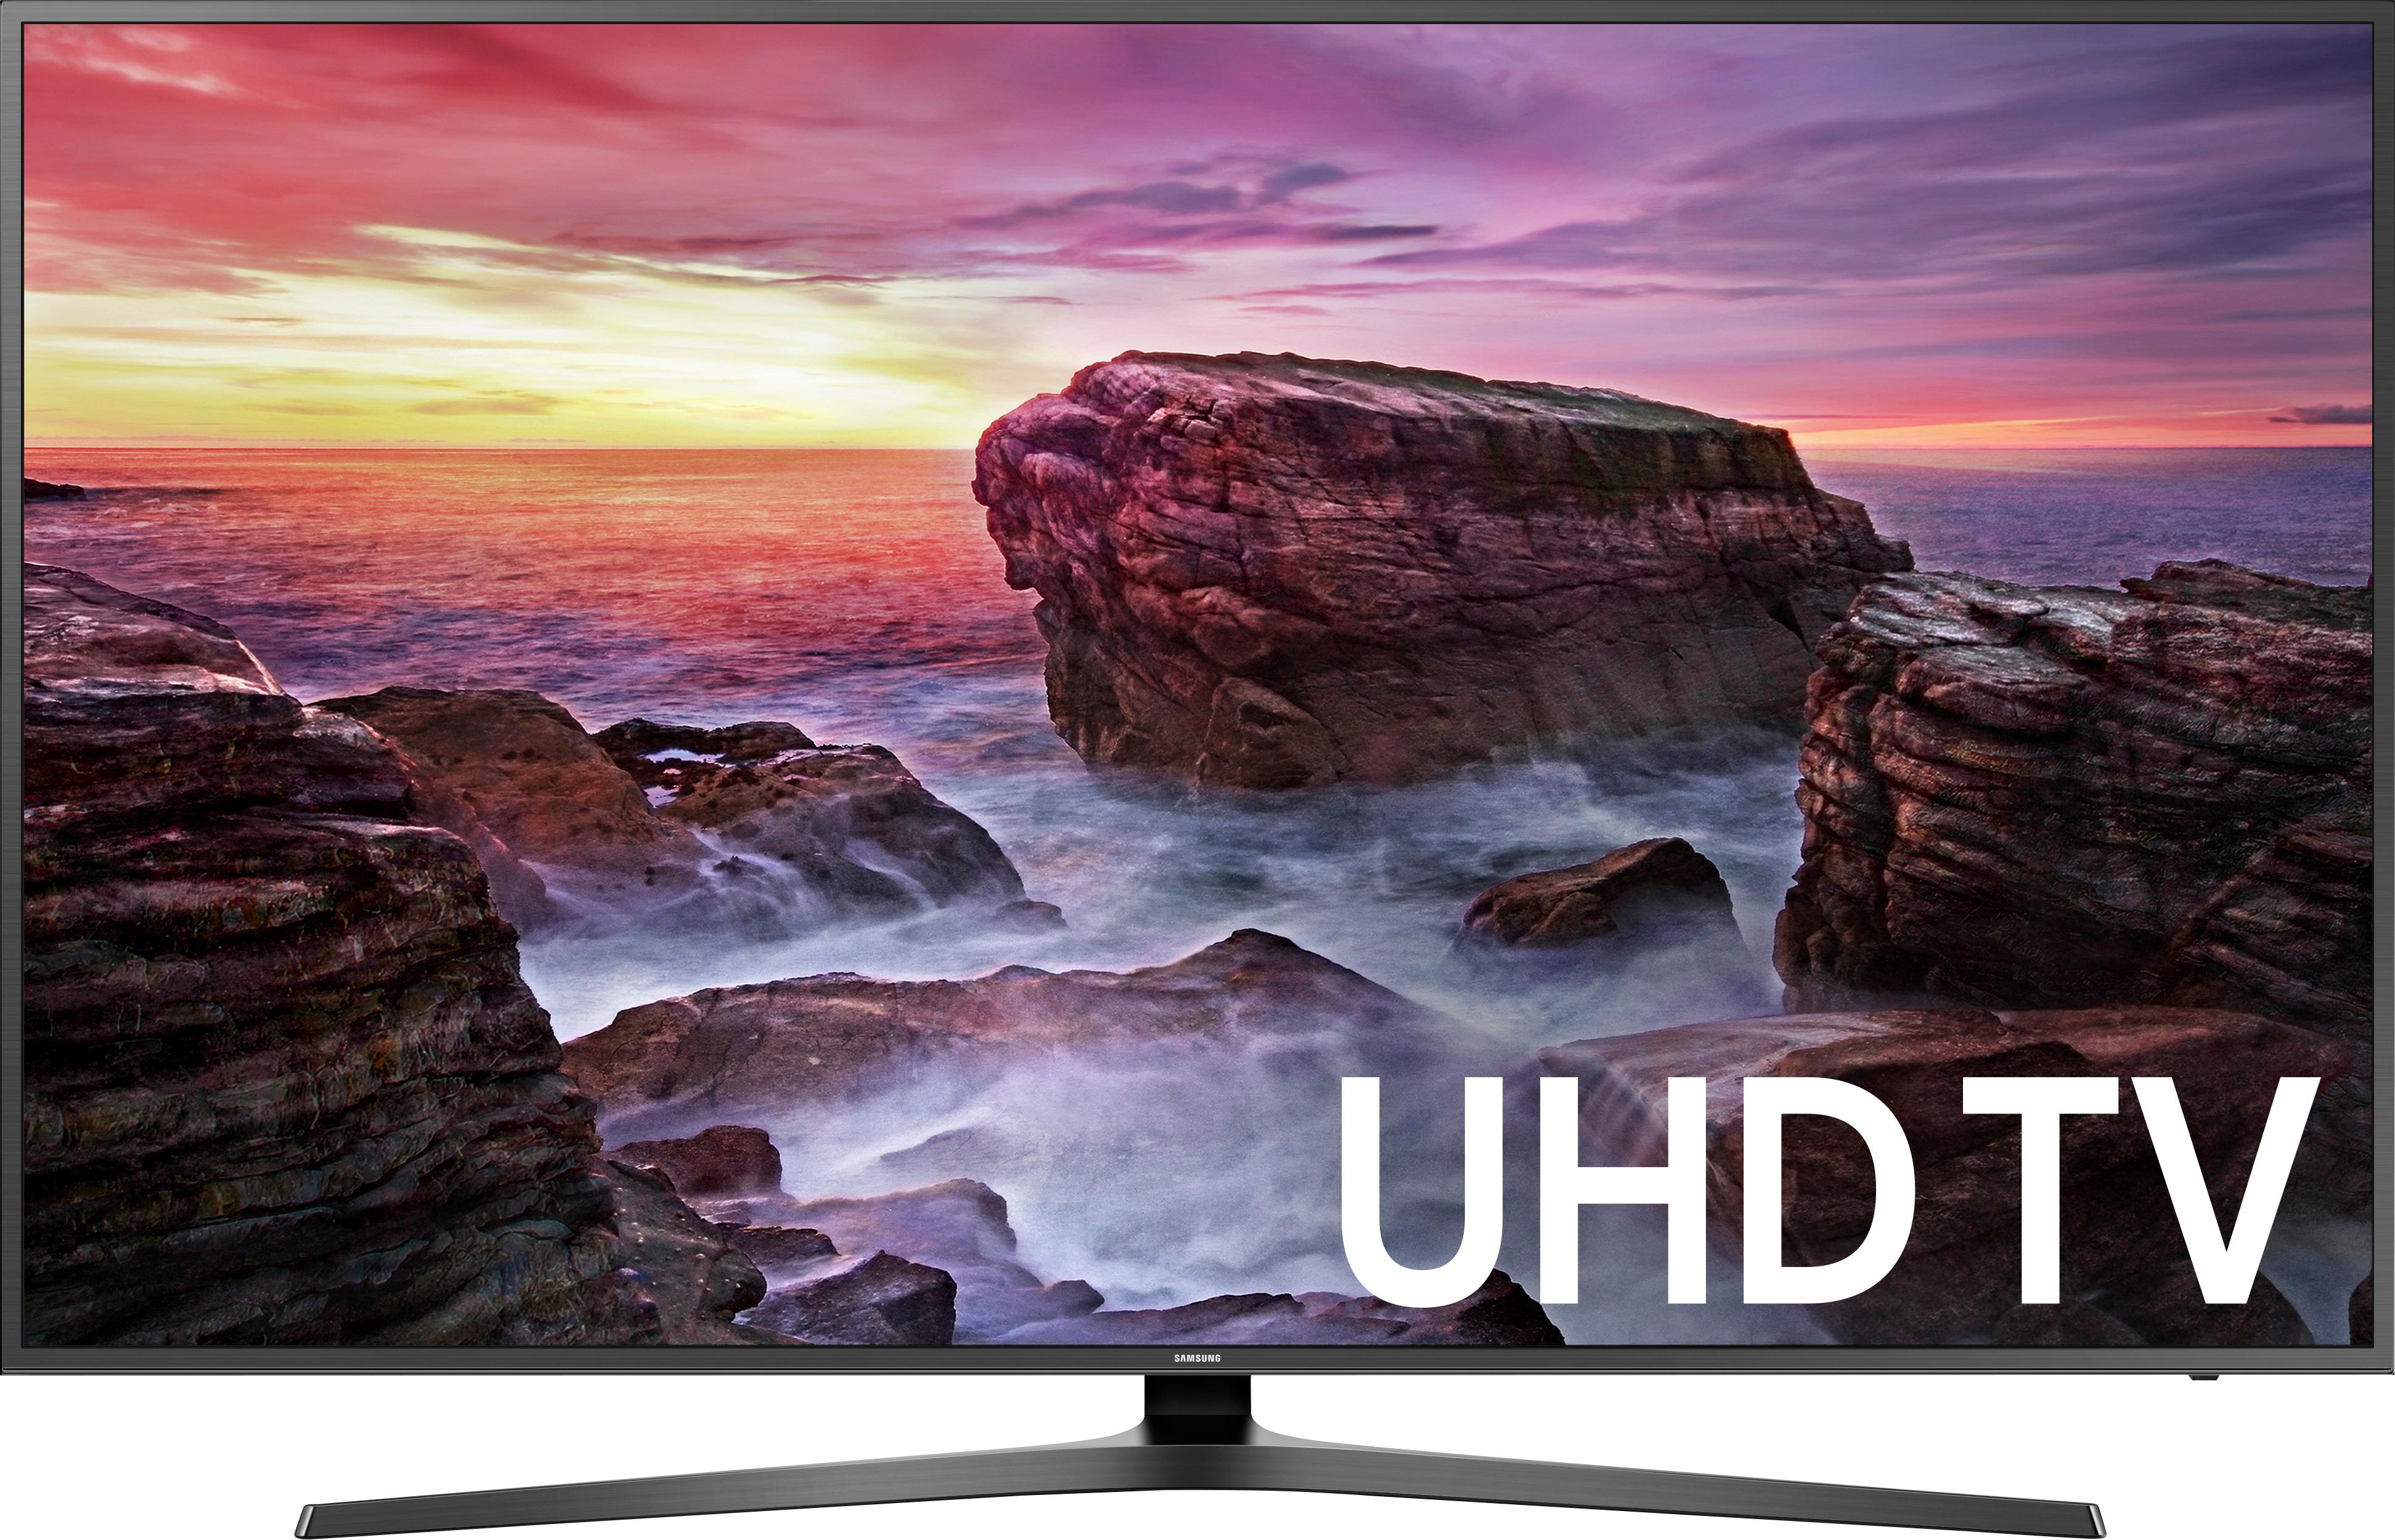 Samsung 58 Class Led Mu6070 Series 2160p Smart 4k Ultra Hd Tv With Hdr Un58mu6070fxza Best Buy